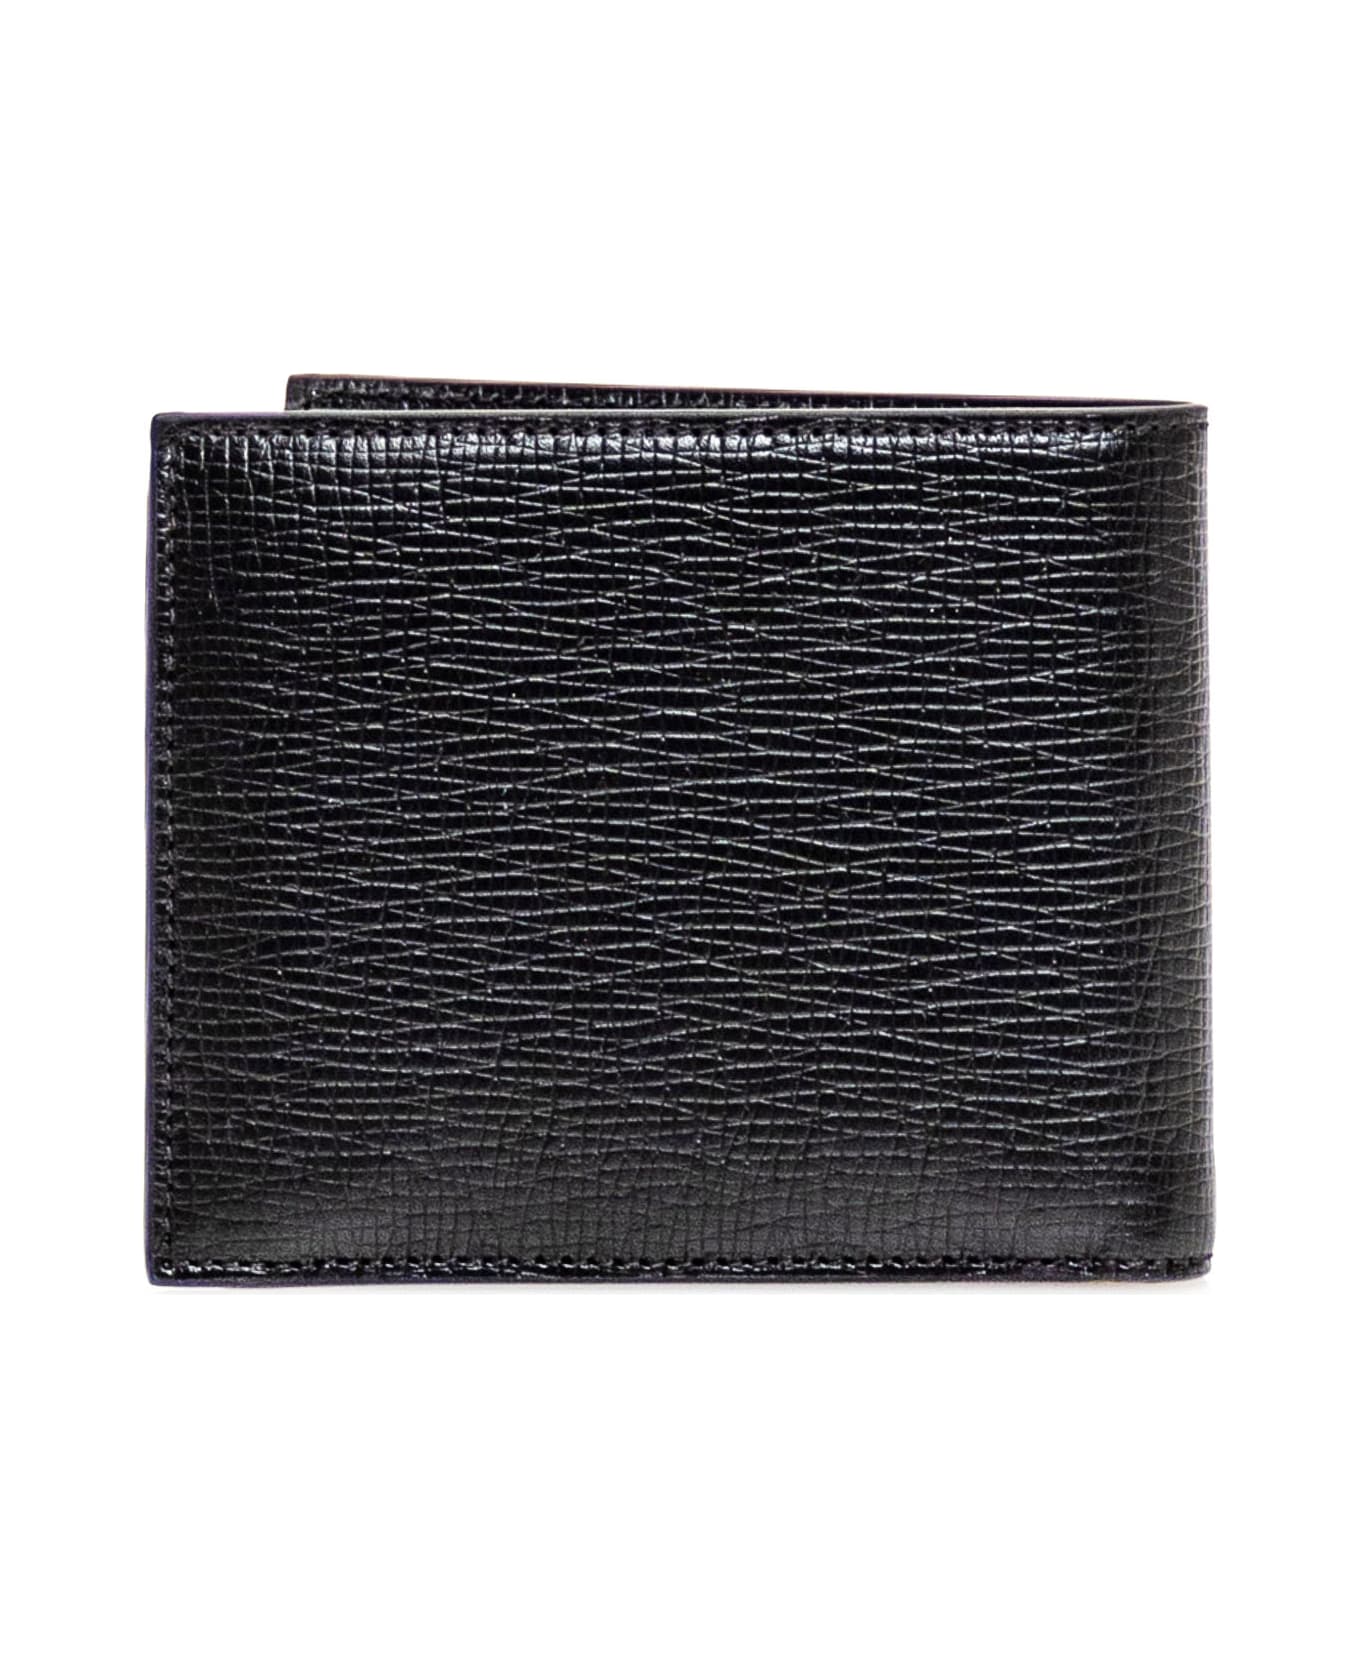 Ferragamo Leather Wallet - NERO 財布